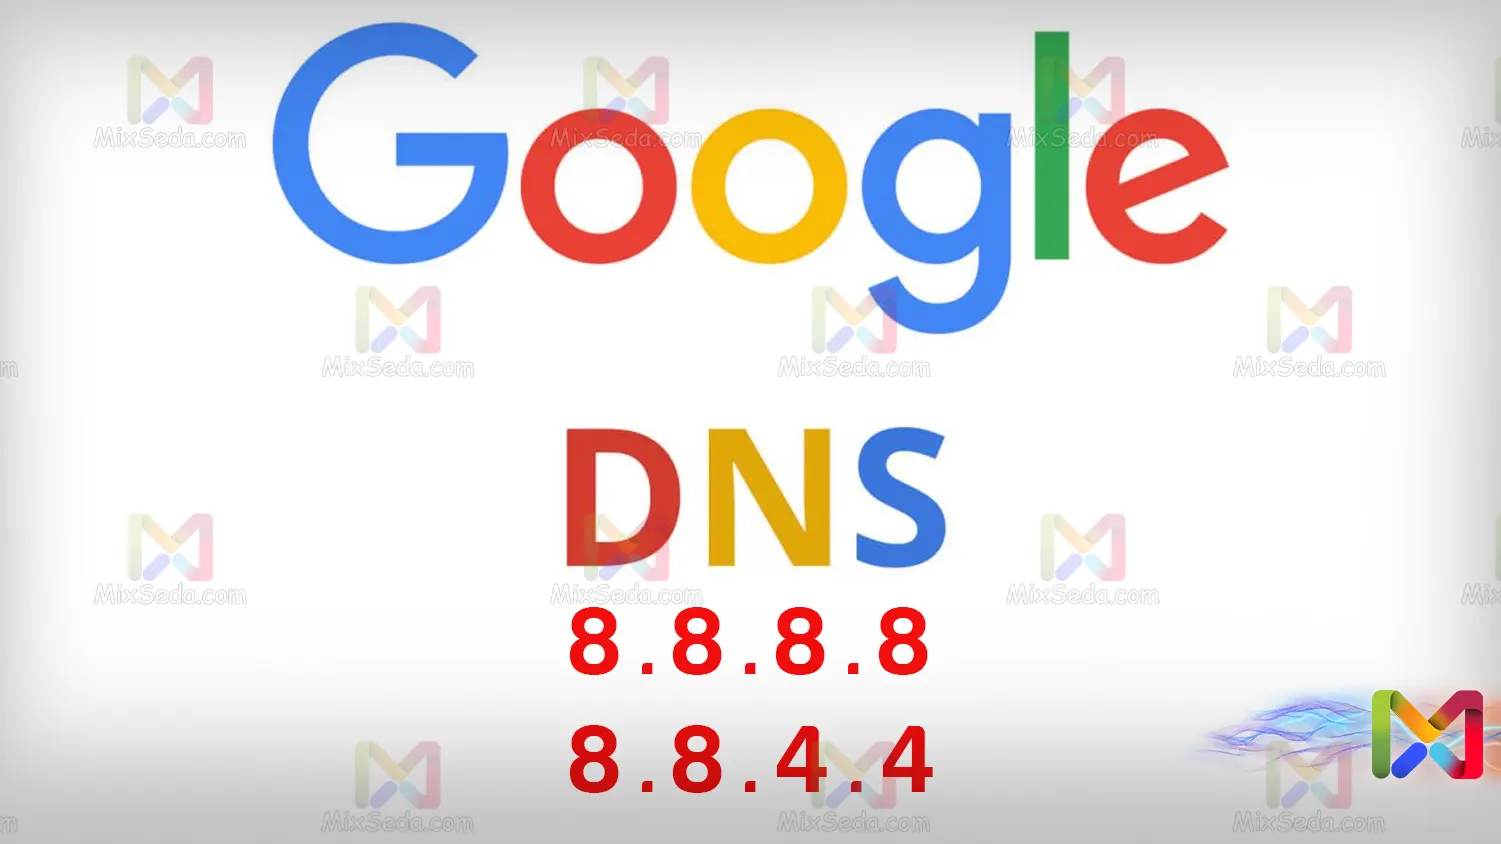  Google Public DNS